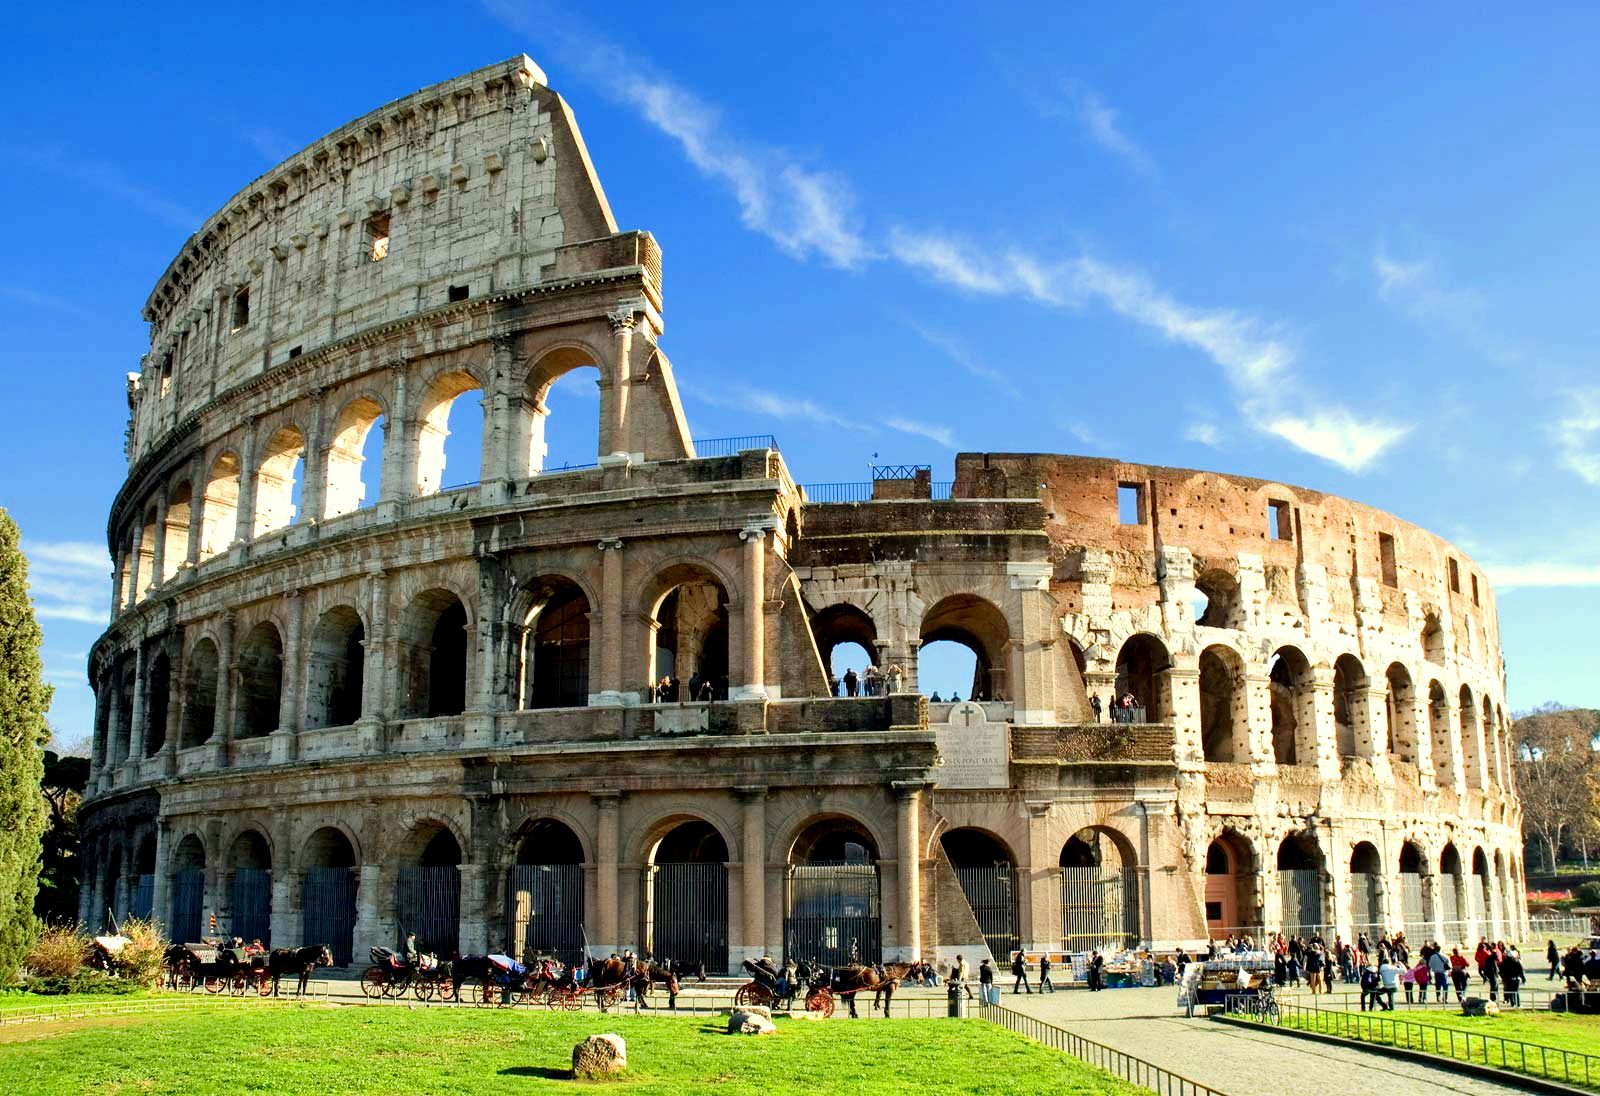 Colosseum-Rome-Italy-travertine-tiles-stone-pavers